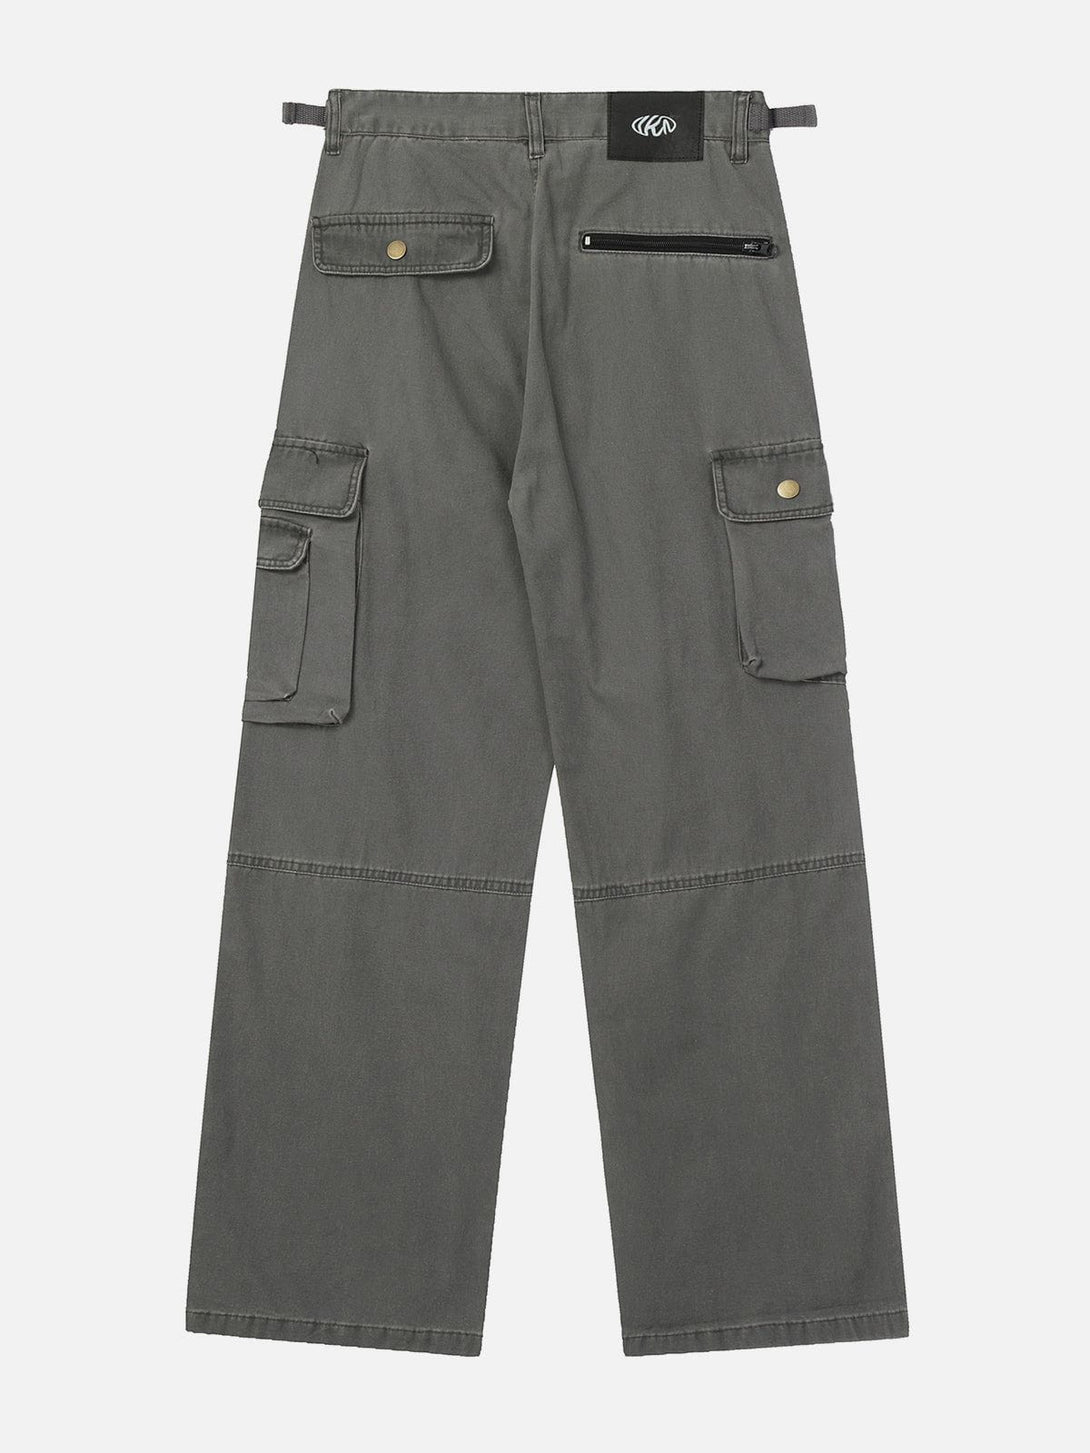 Levefly - Cargo Multi-Pocket Jeans - Streetwear Fashion - levefly.com